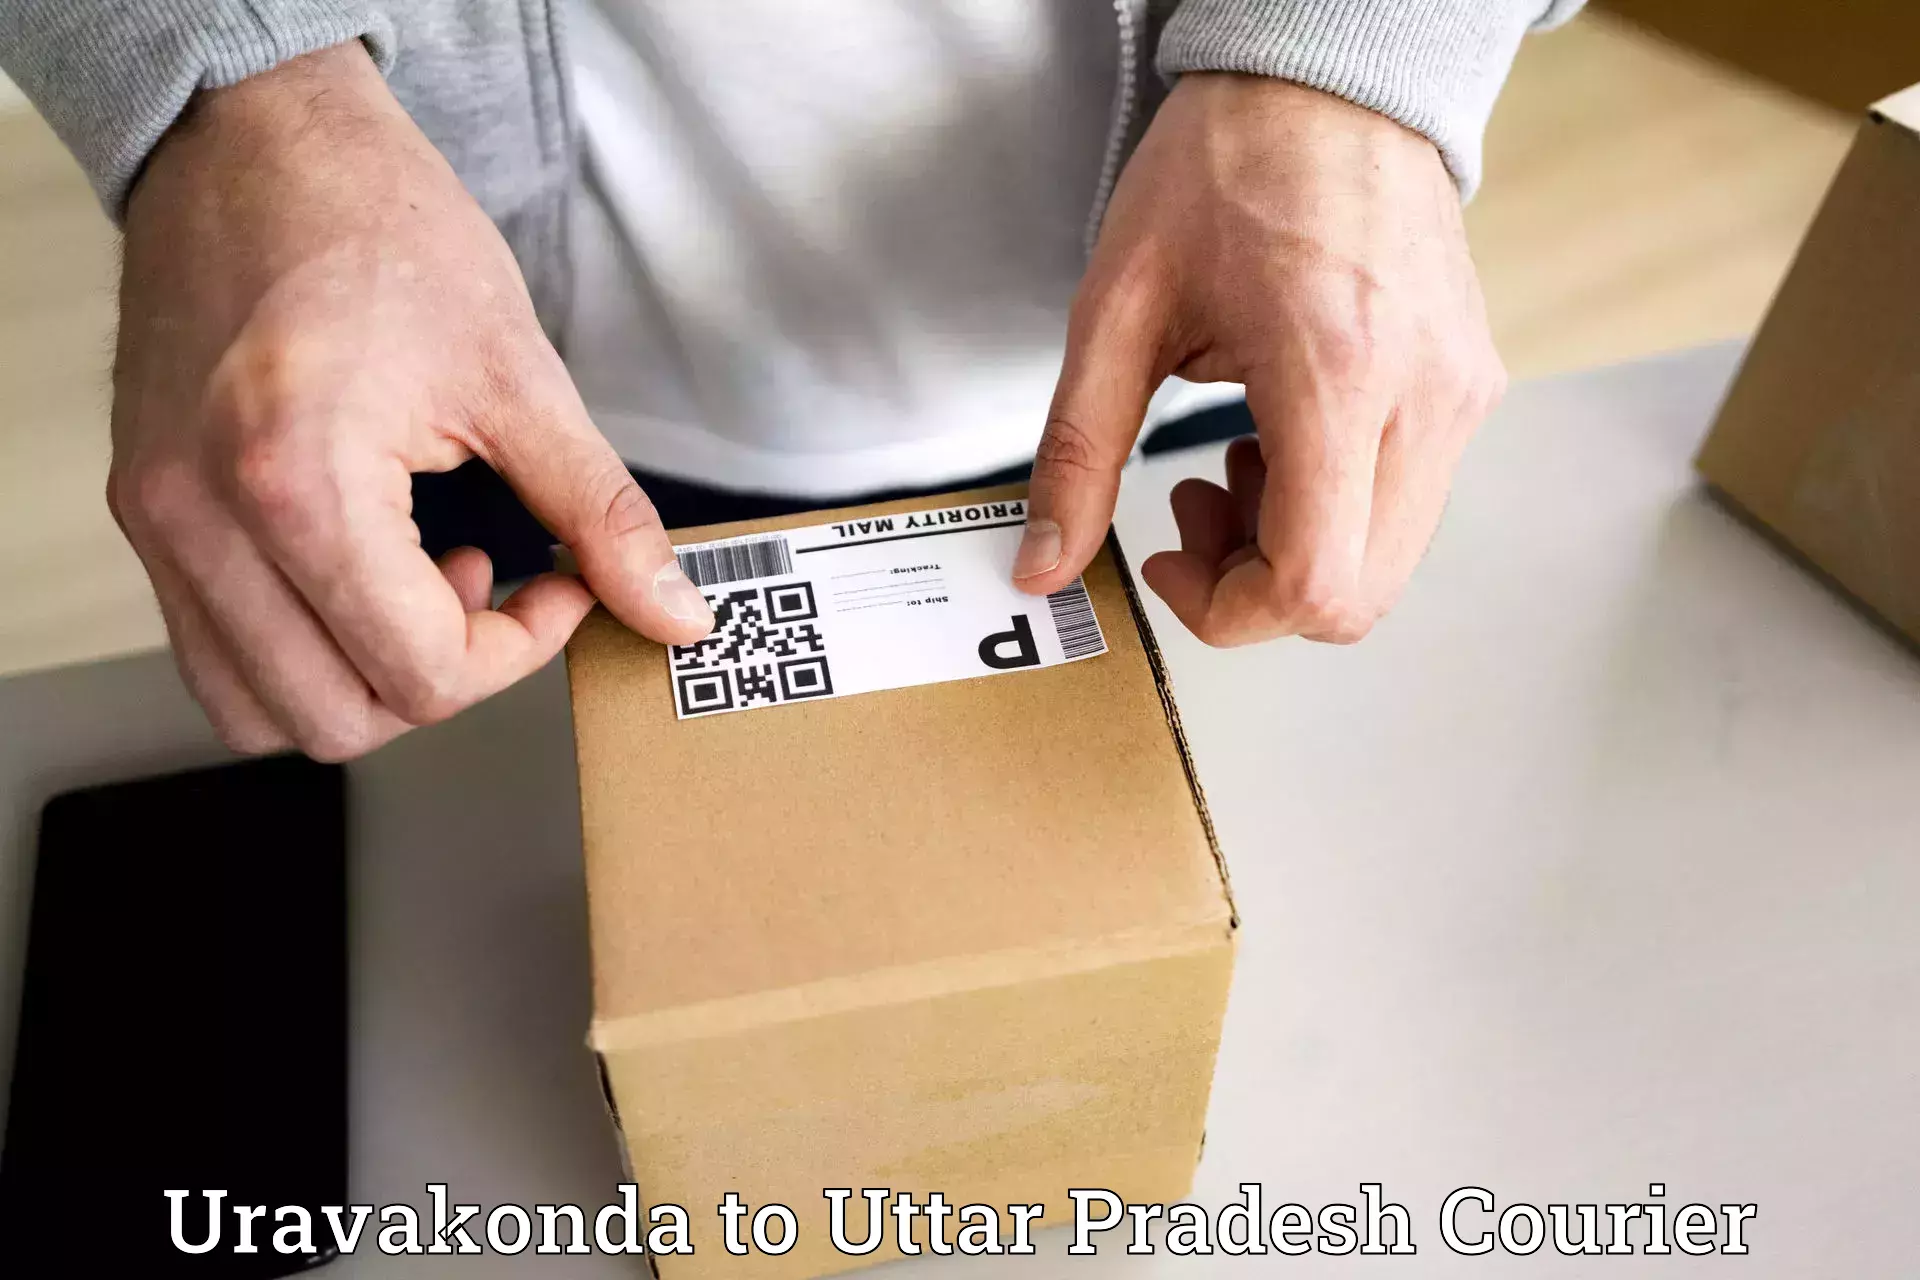 Fast delivery service Uravakonda to Ayodhya